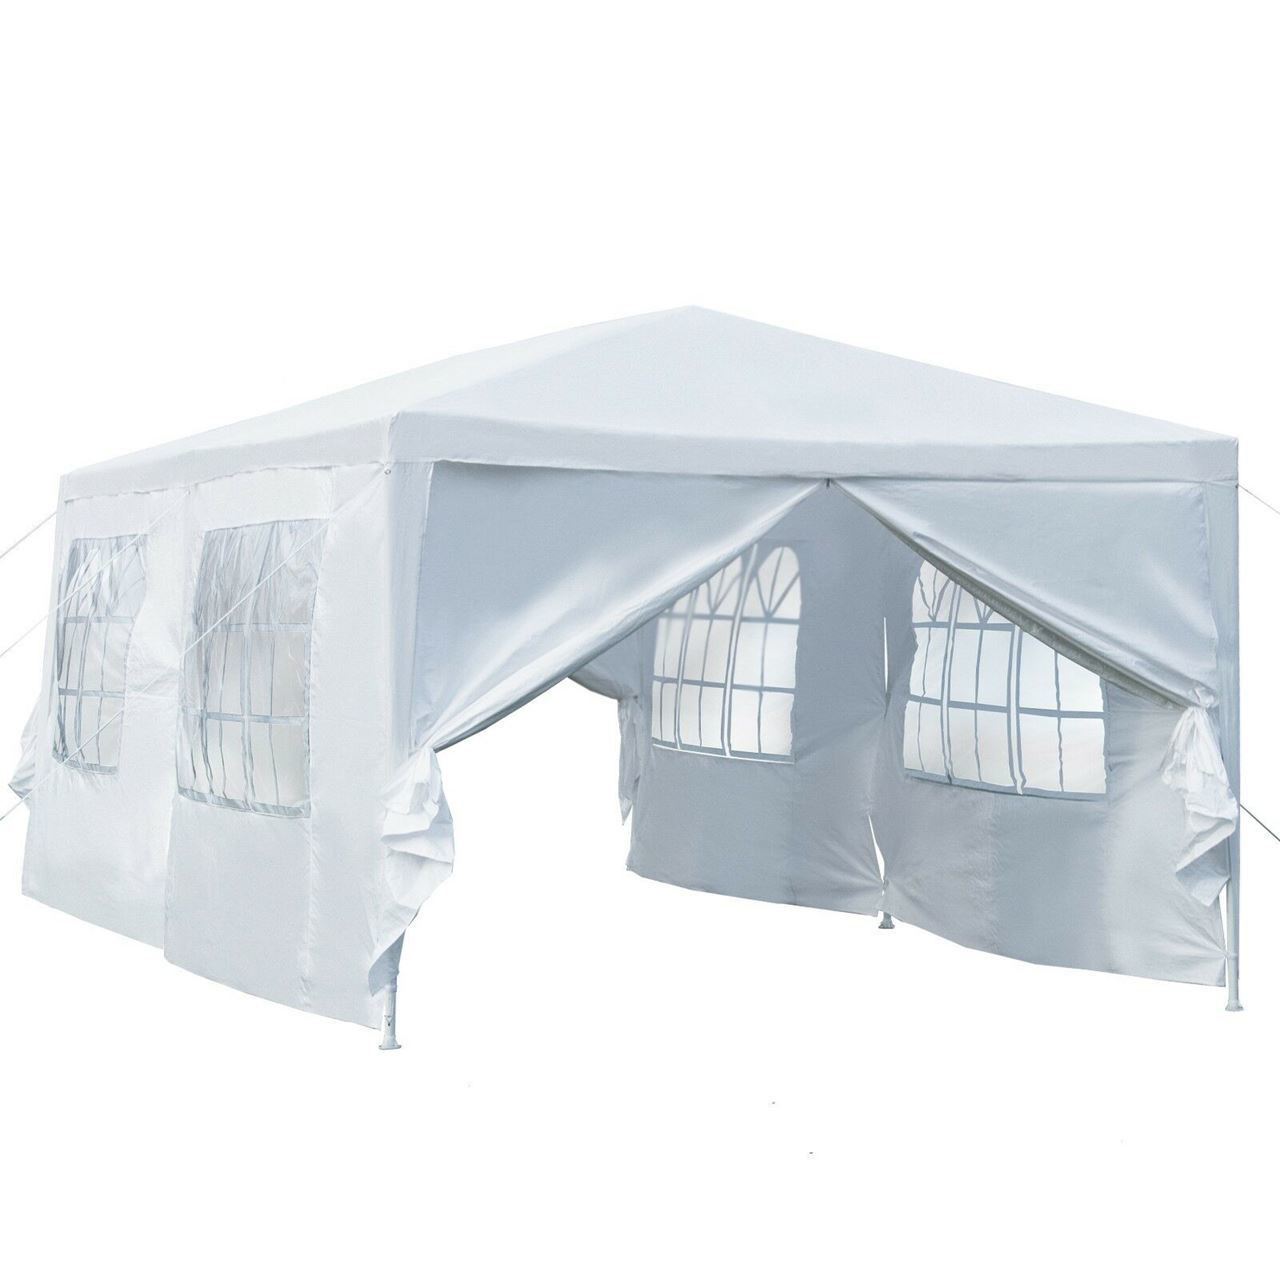 ConvenienceBoutique Outdoor Canopy Tent Heavy Duty 10' x 20'